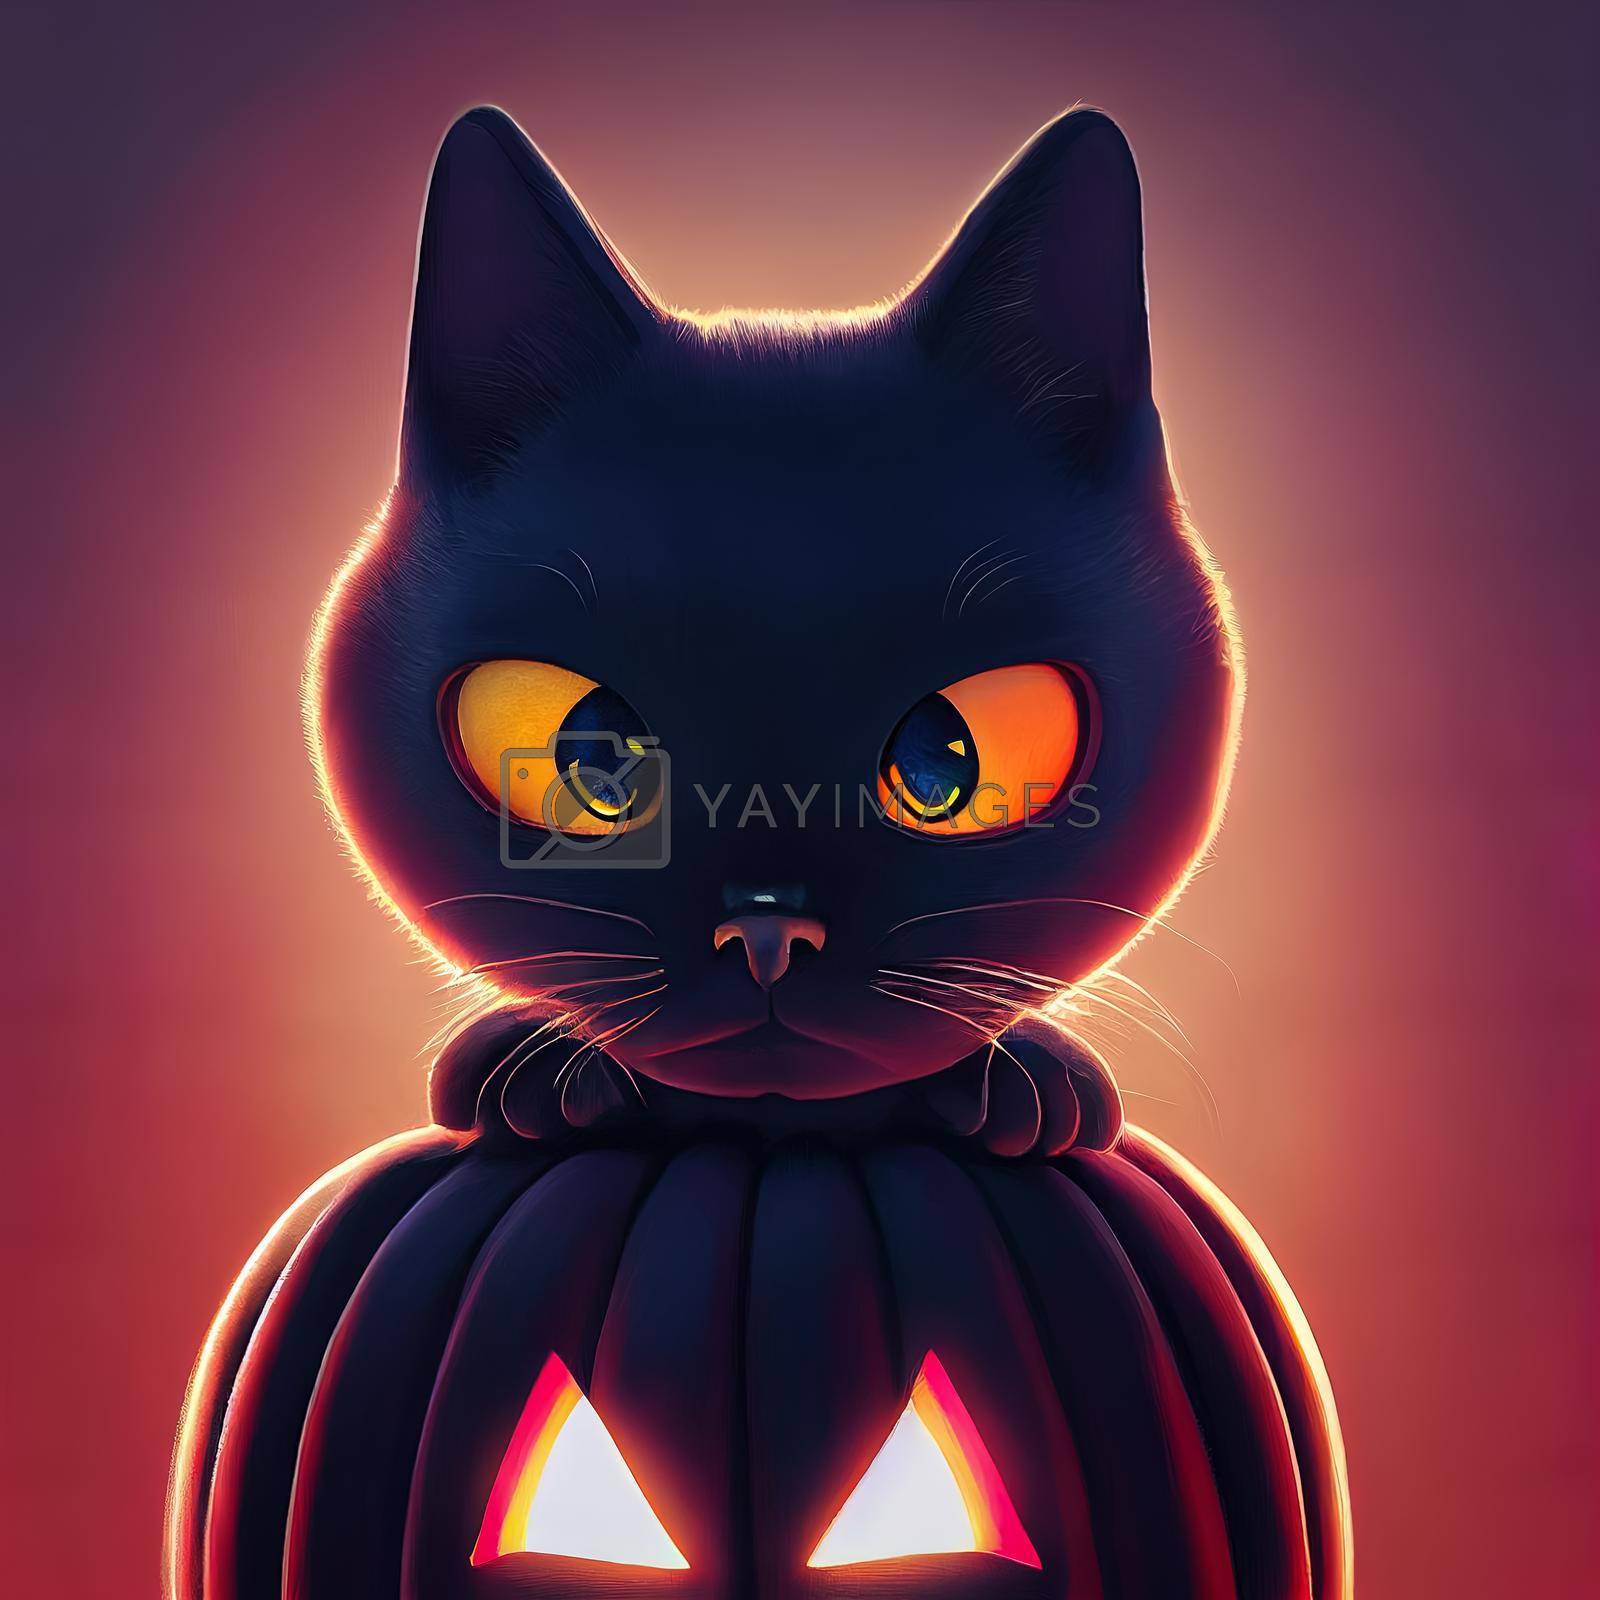 Royalty free image of illustration of a cute halloween black cat whit evil pumpkin, black cat animated illustration. by JpRamos